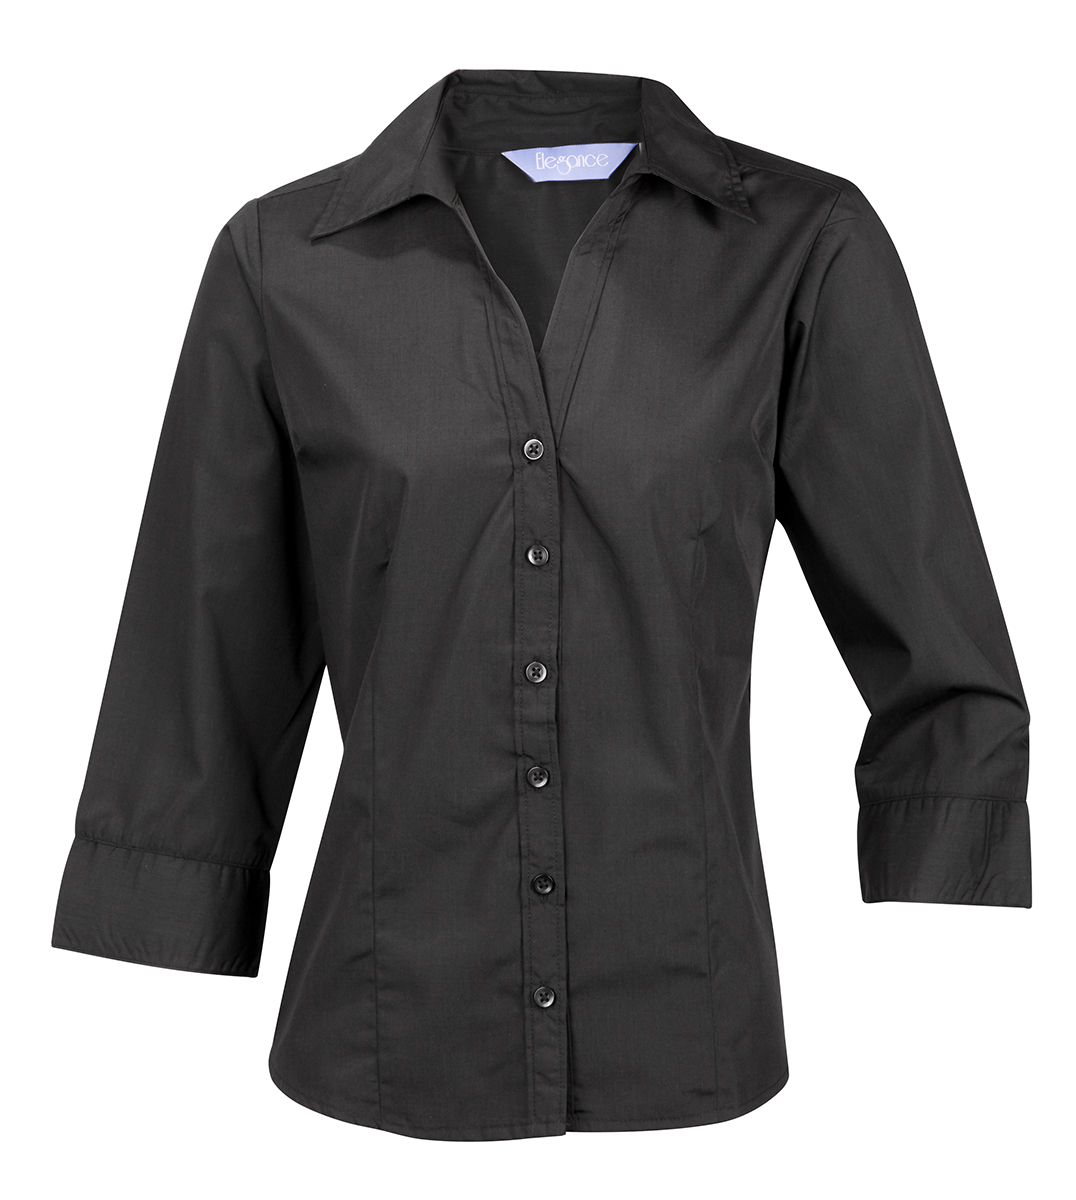 Plain Ladies Womens Blouse Shirt Top 3/4 Sleeve Work Office Formal Open Neck